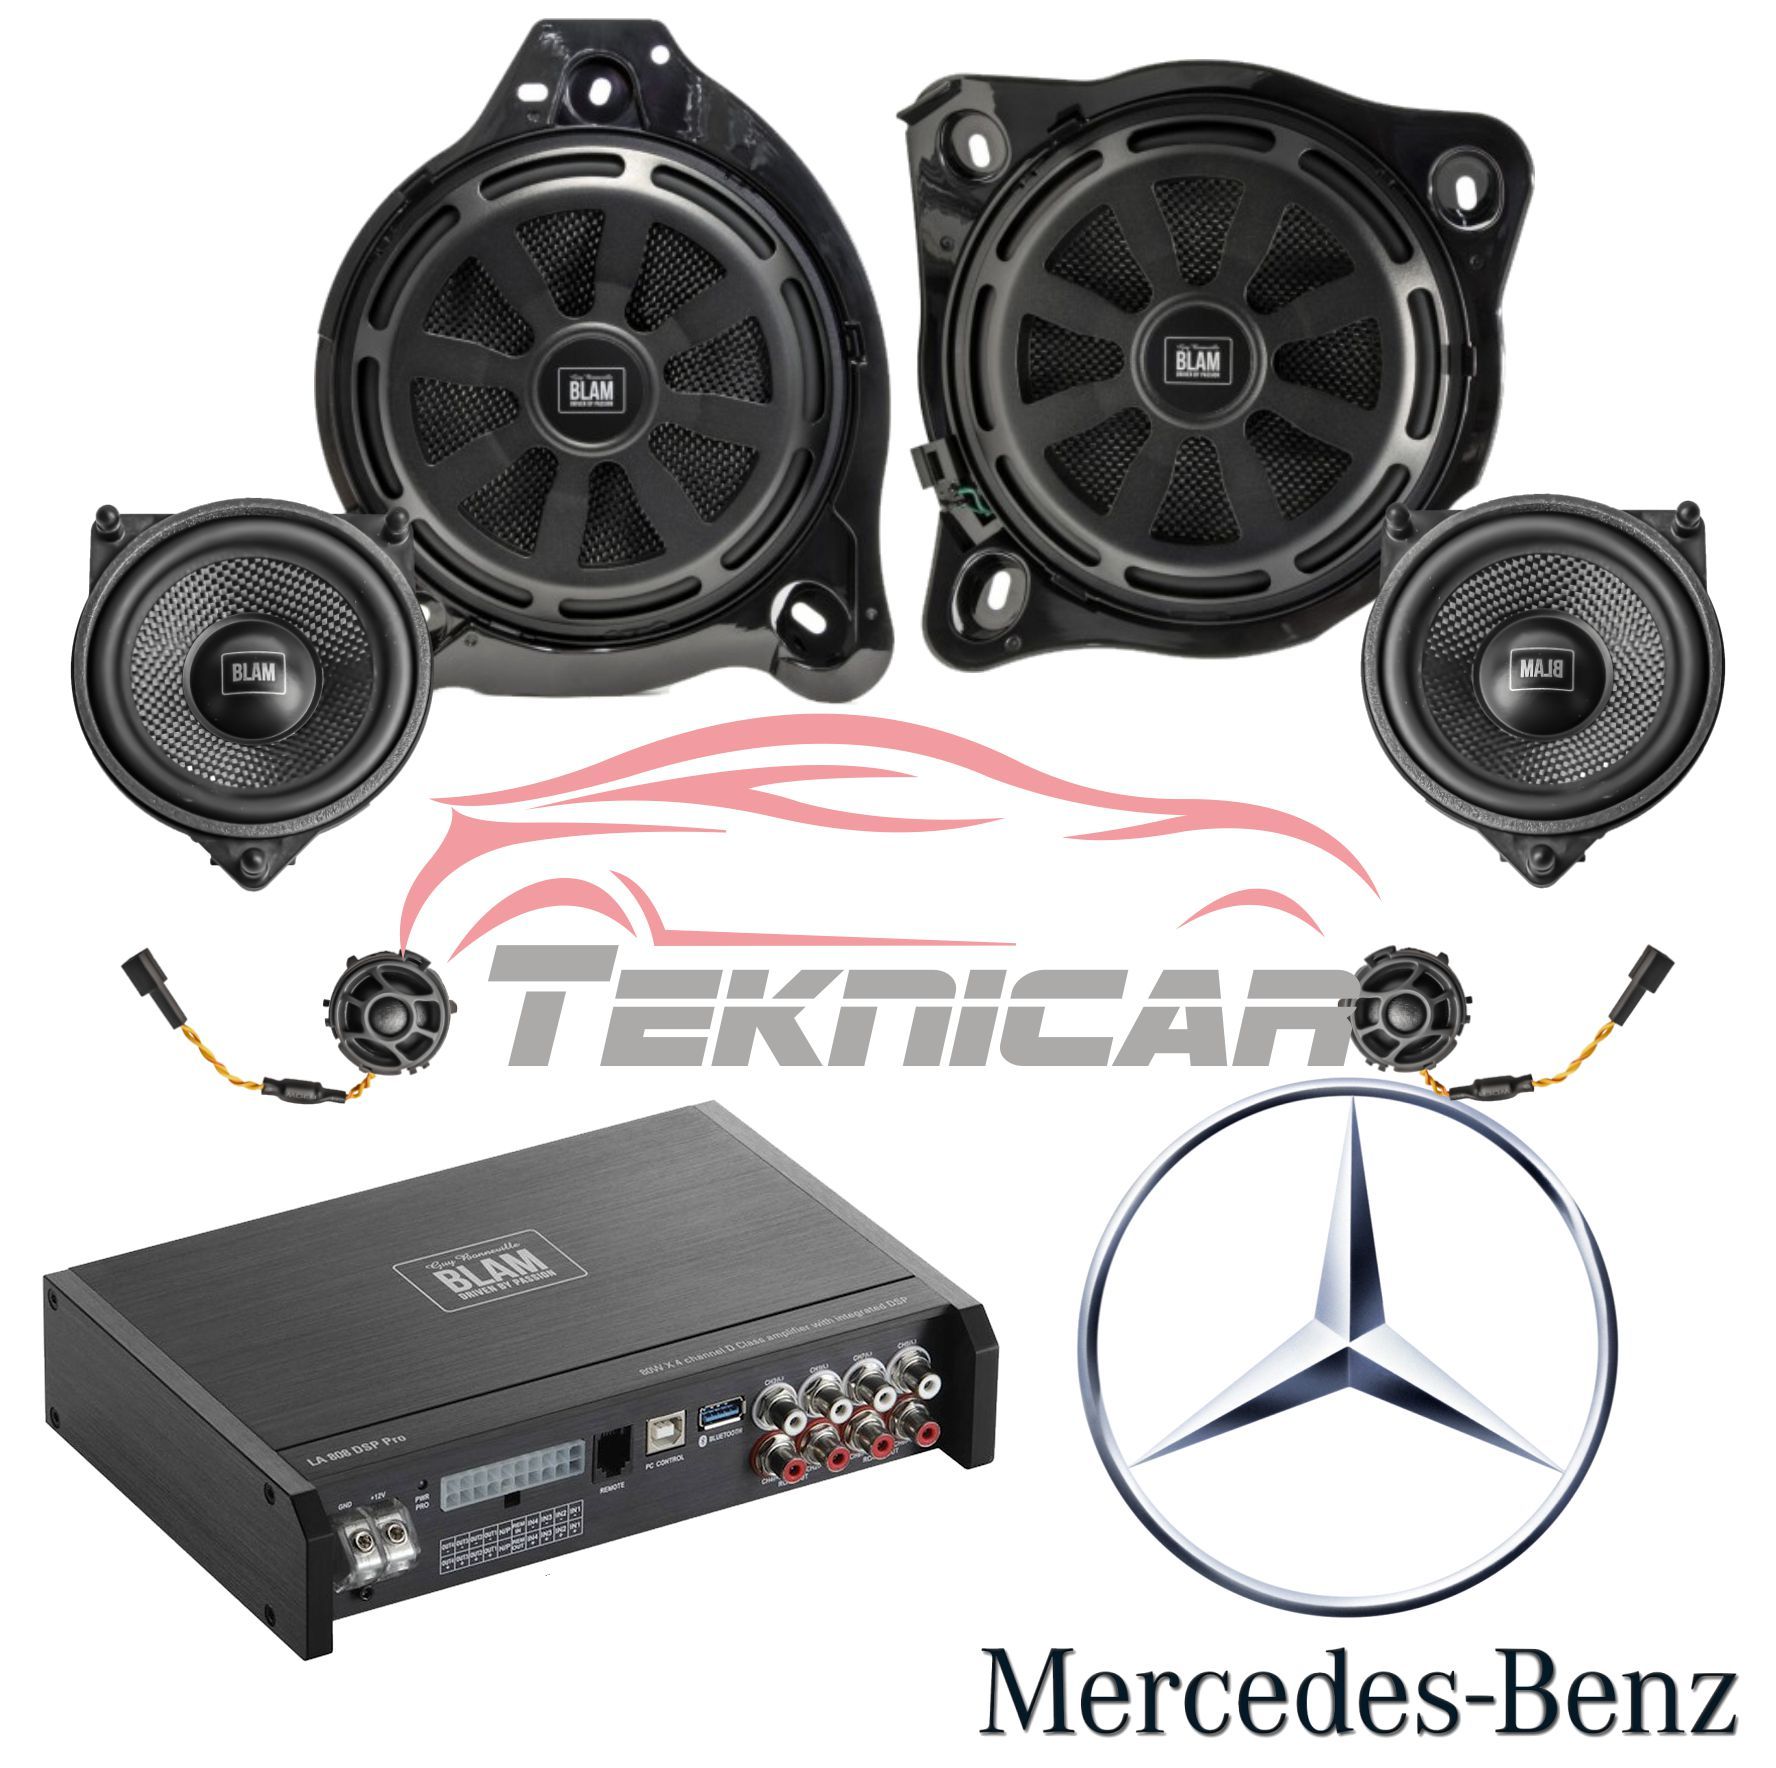 Conjunto sonido Mercedes Blam Audio